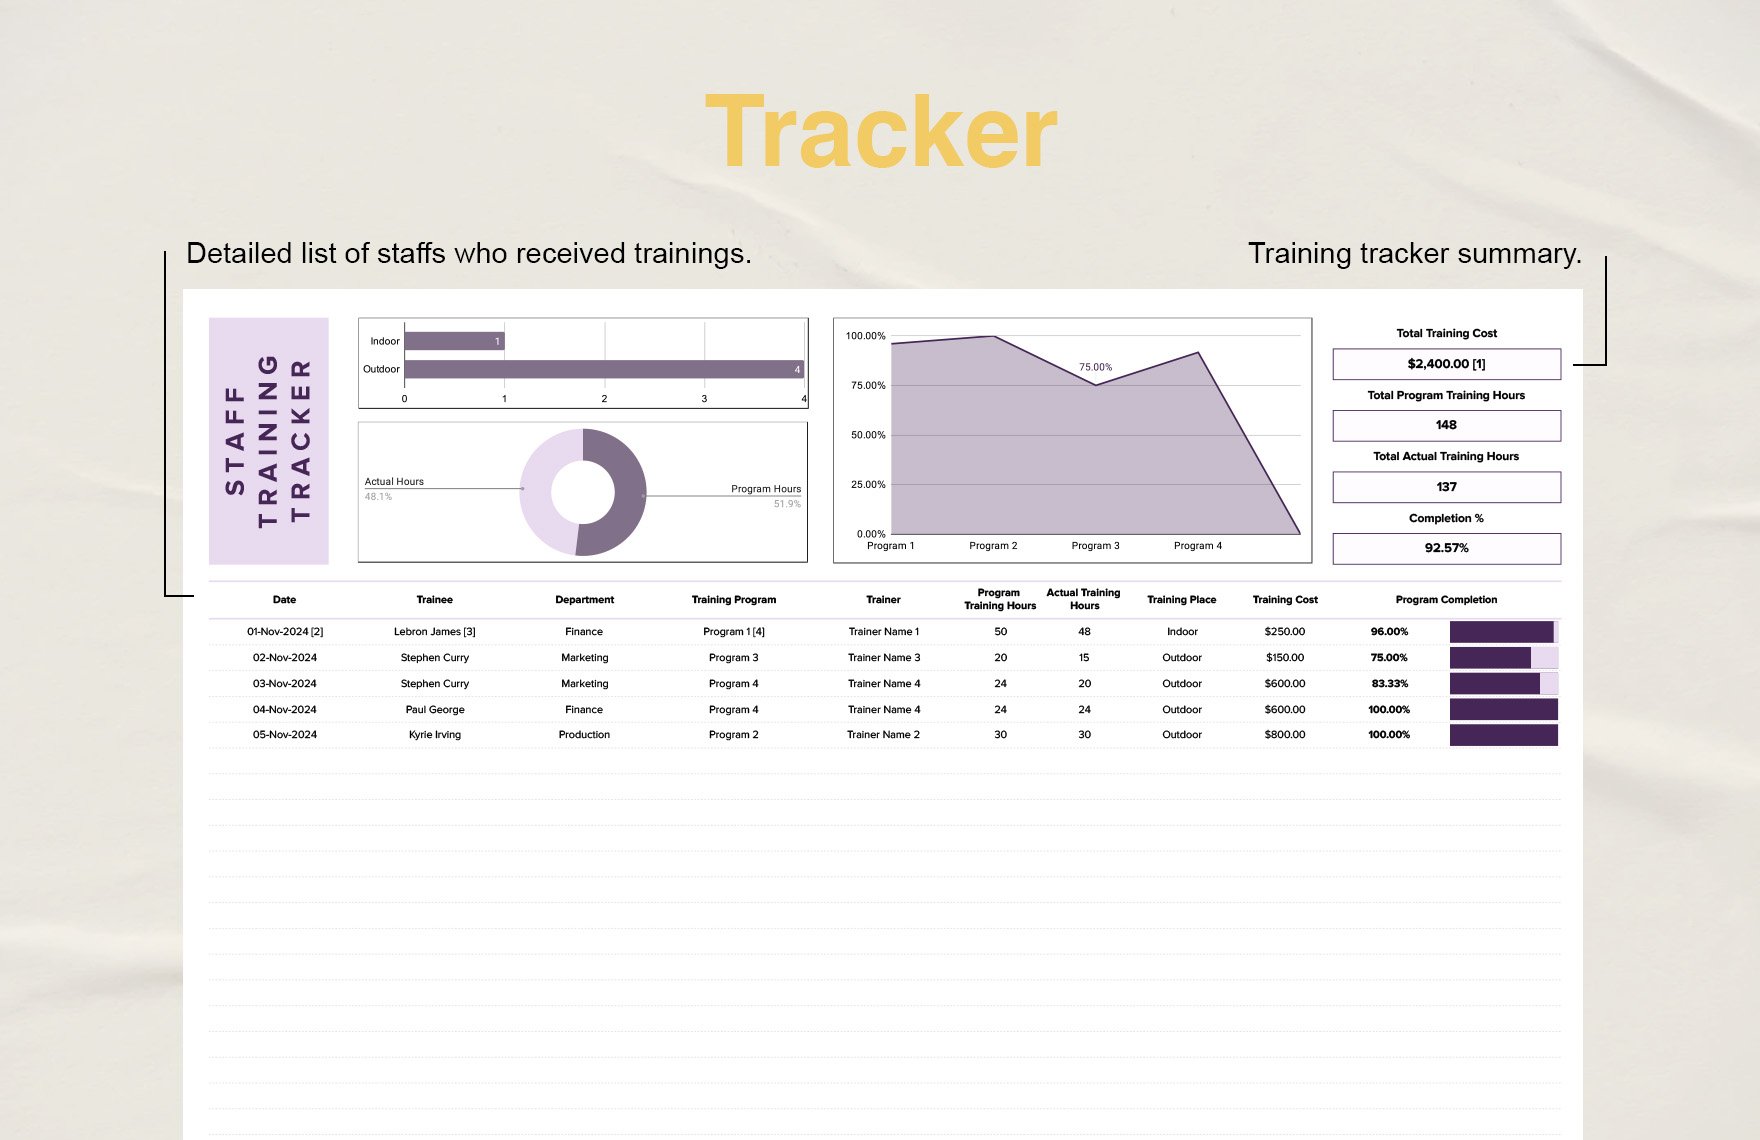 Staff Training Tracker Template